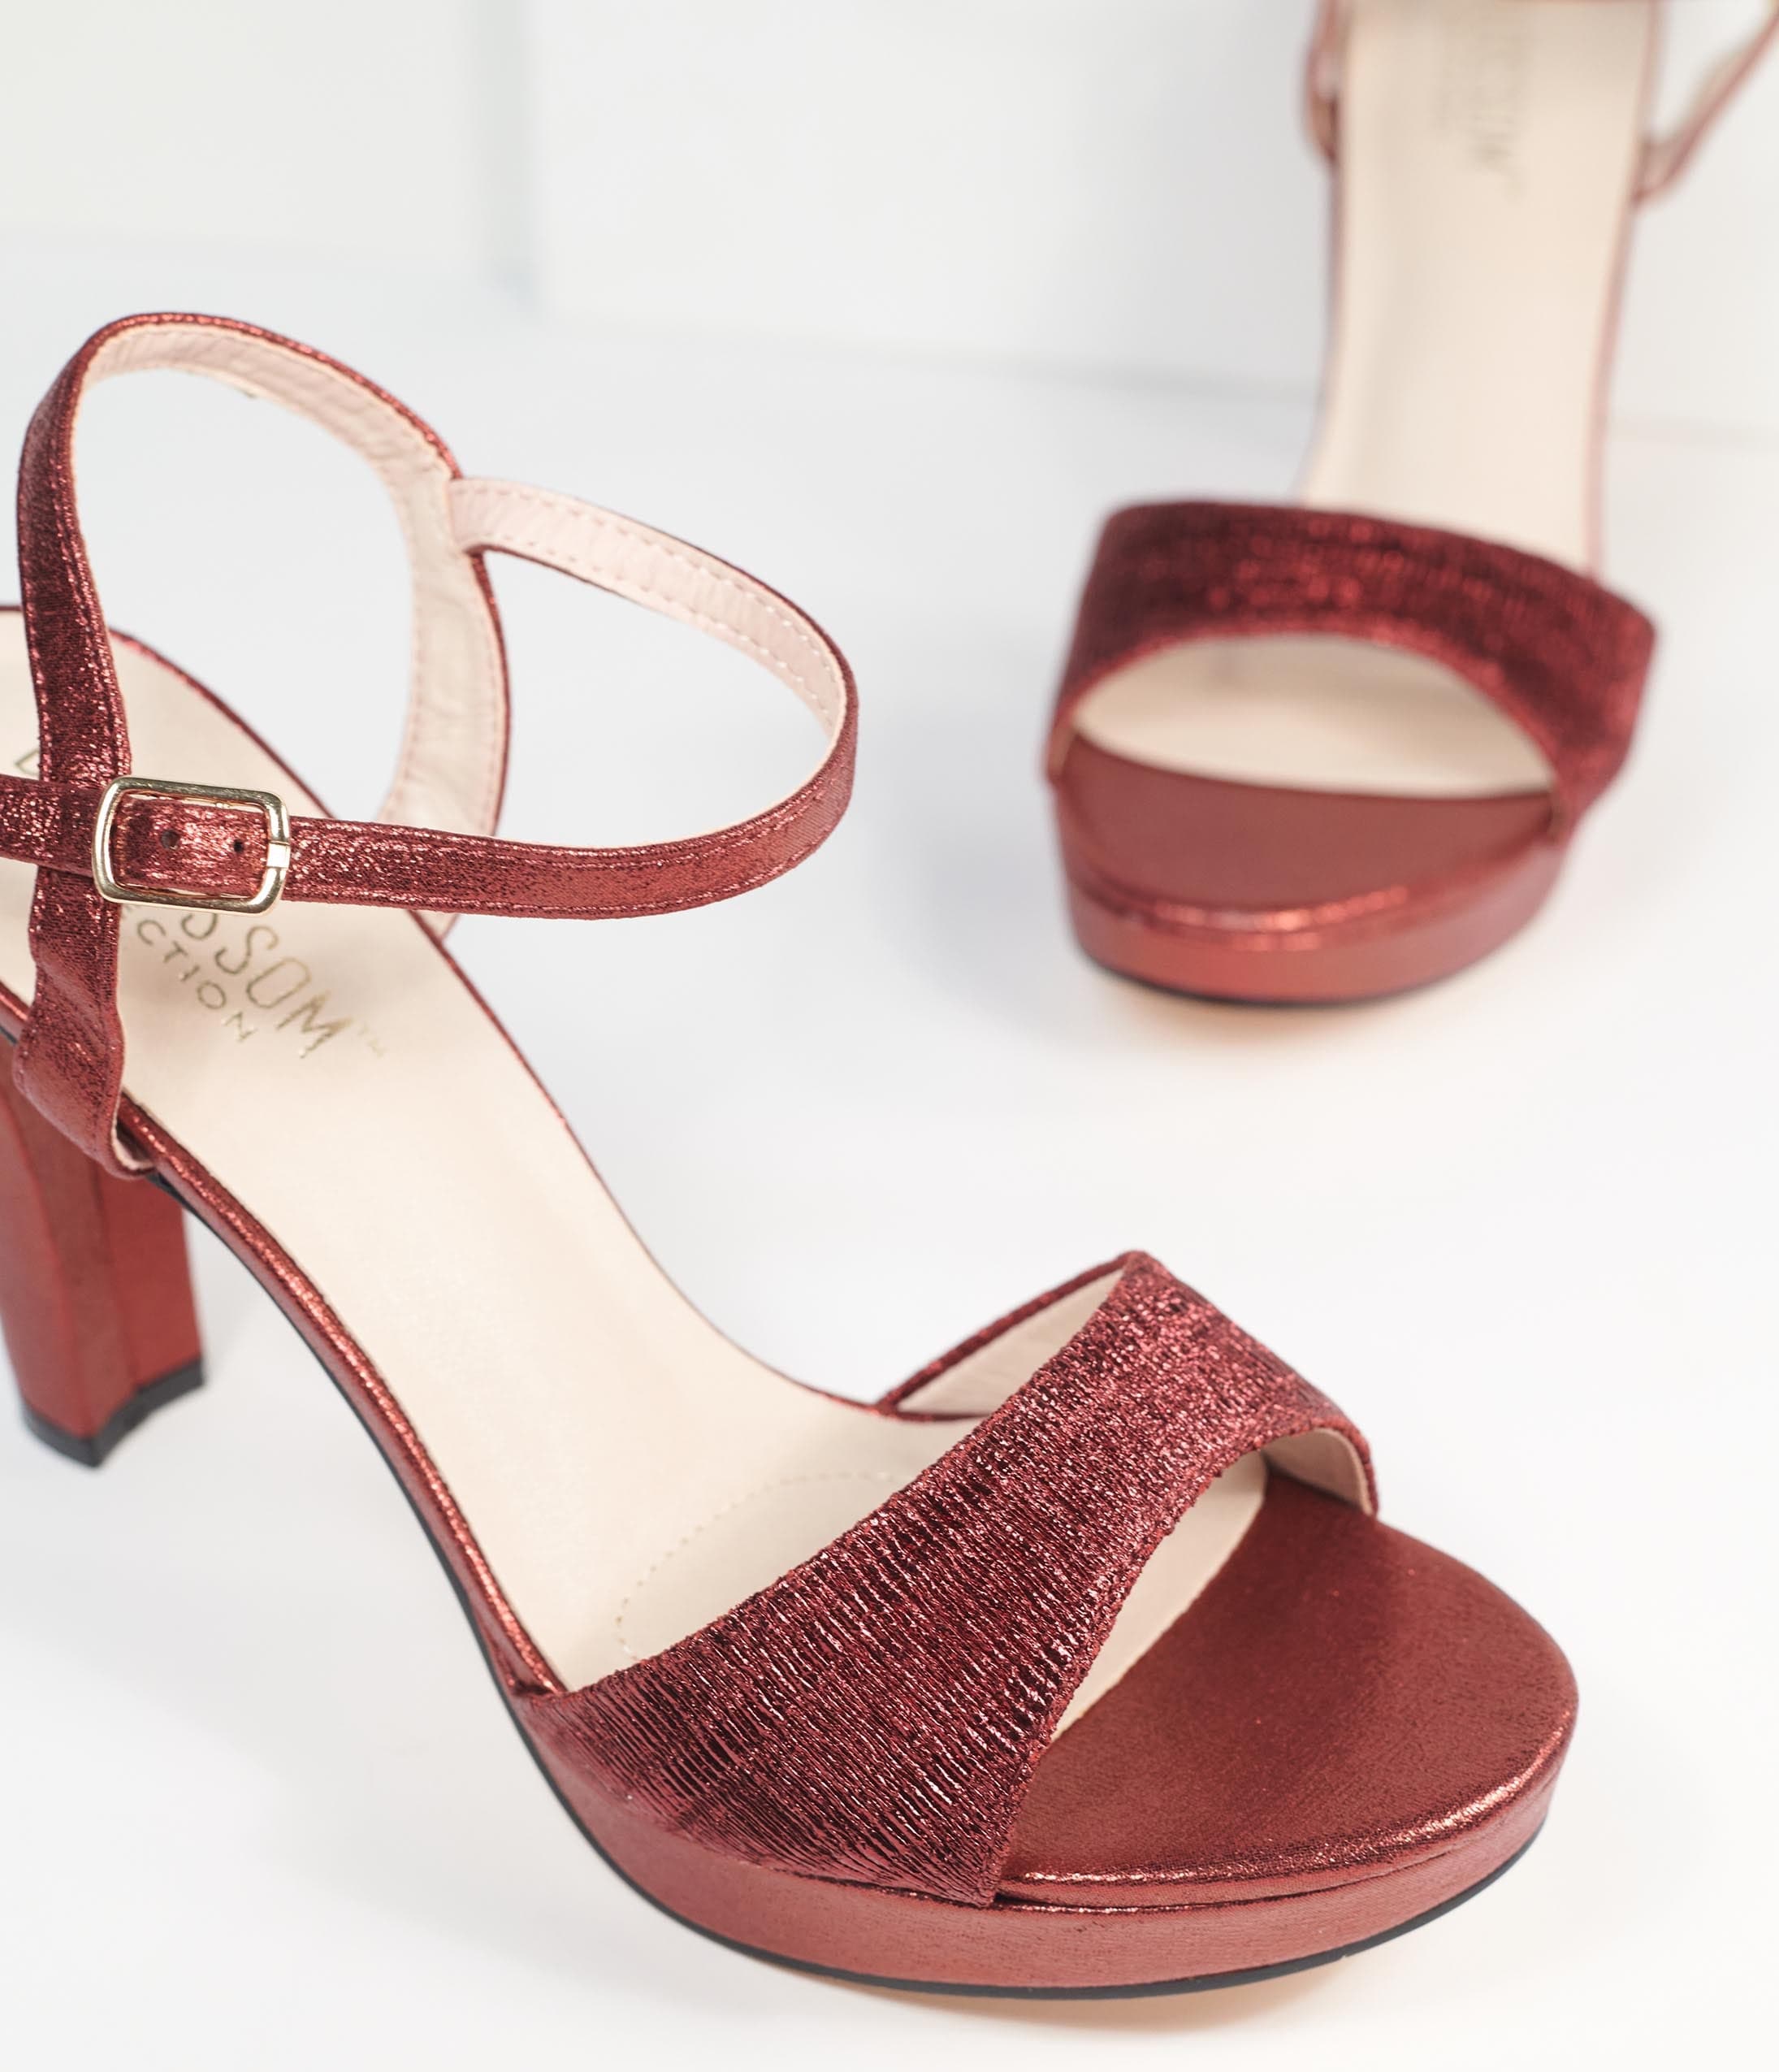 RAID Exclusive Jewel square toe mid heeled sandal in metallic wine | ASOS